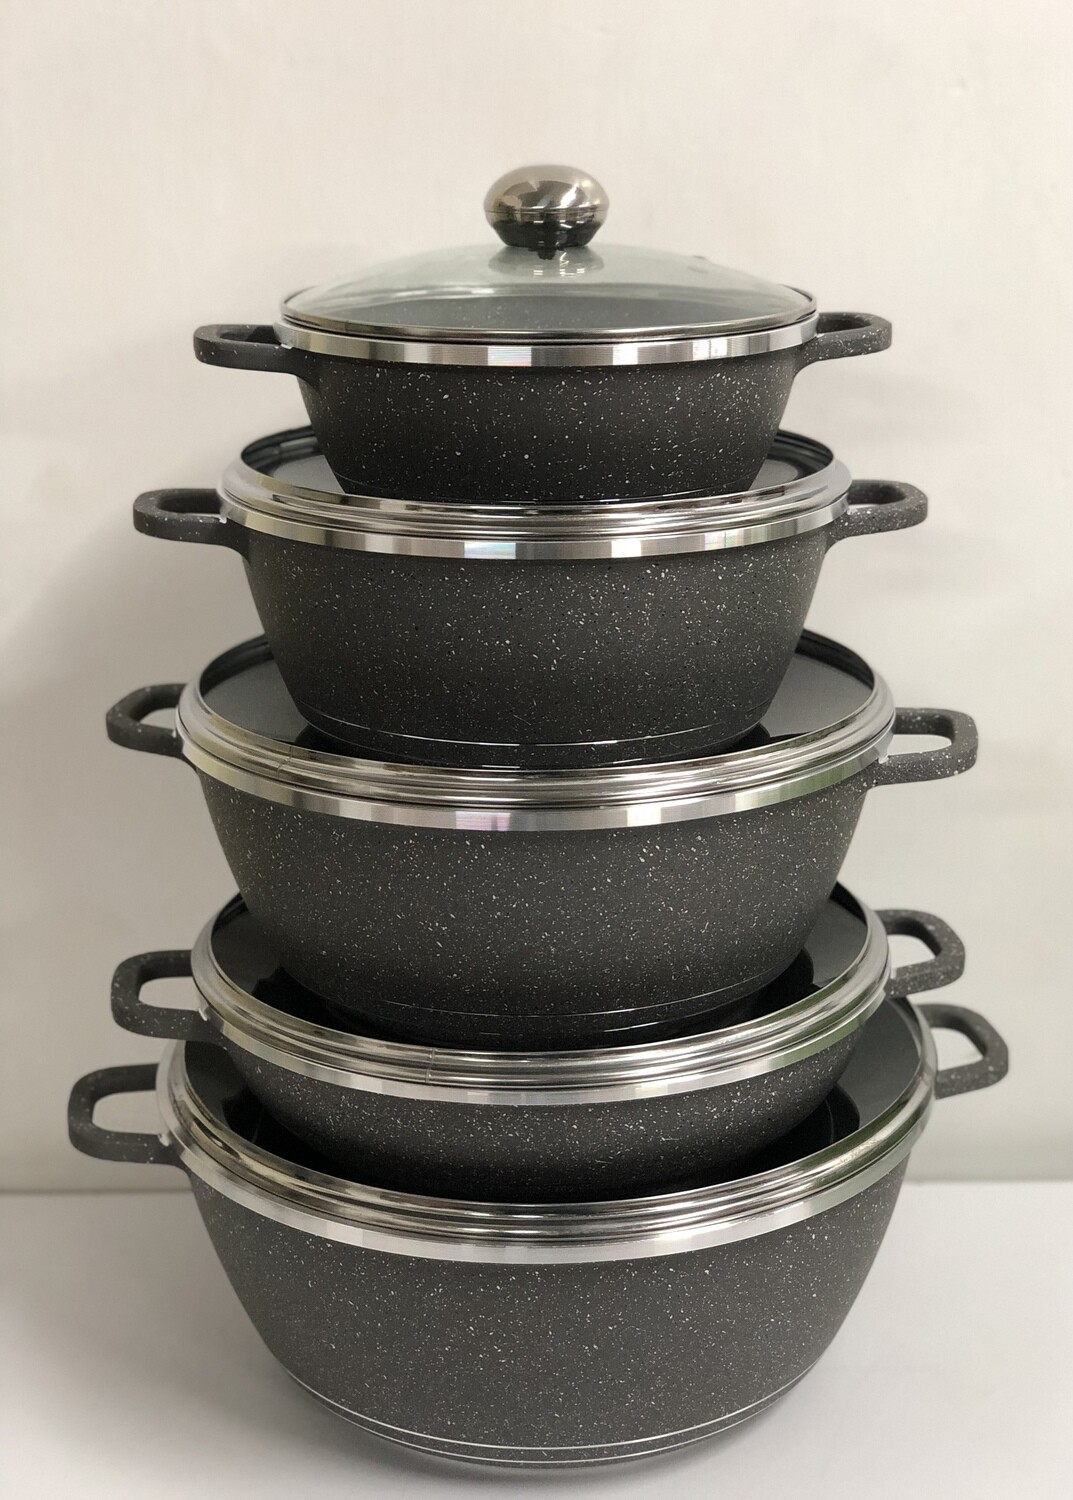 Bosch 10pc Cooking Set, Granite heavy duty cooking pots set